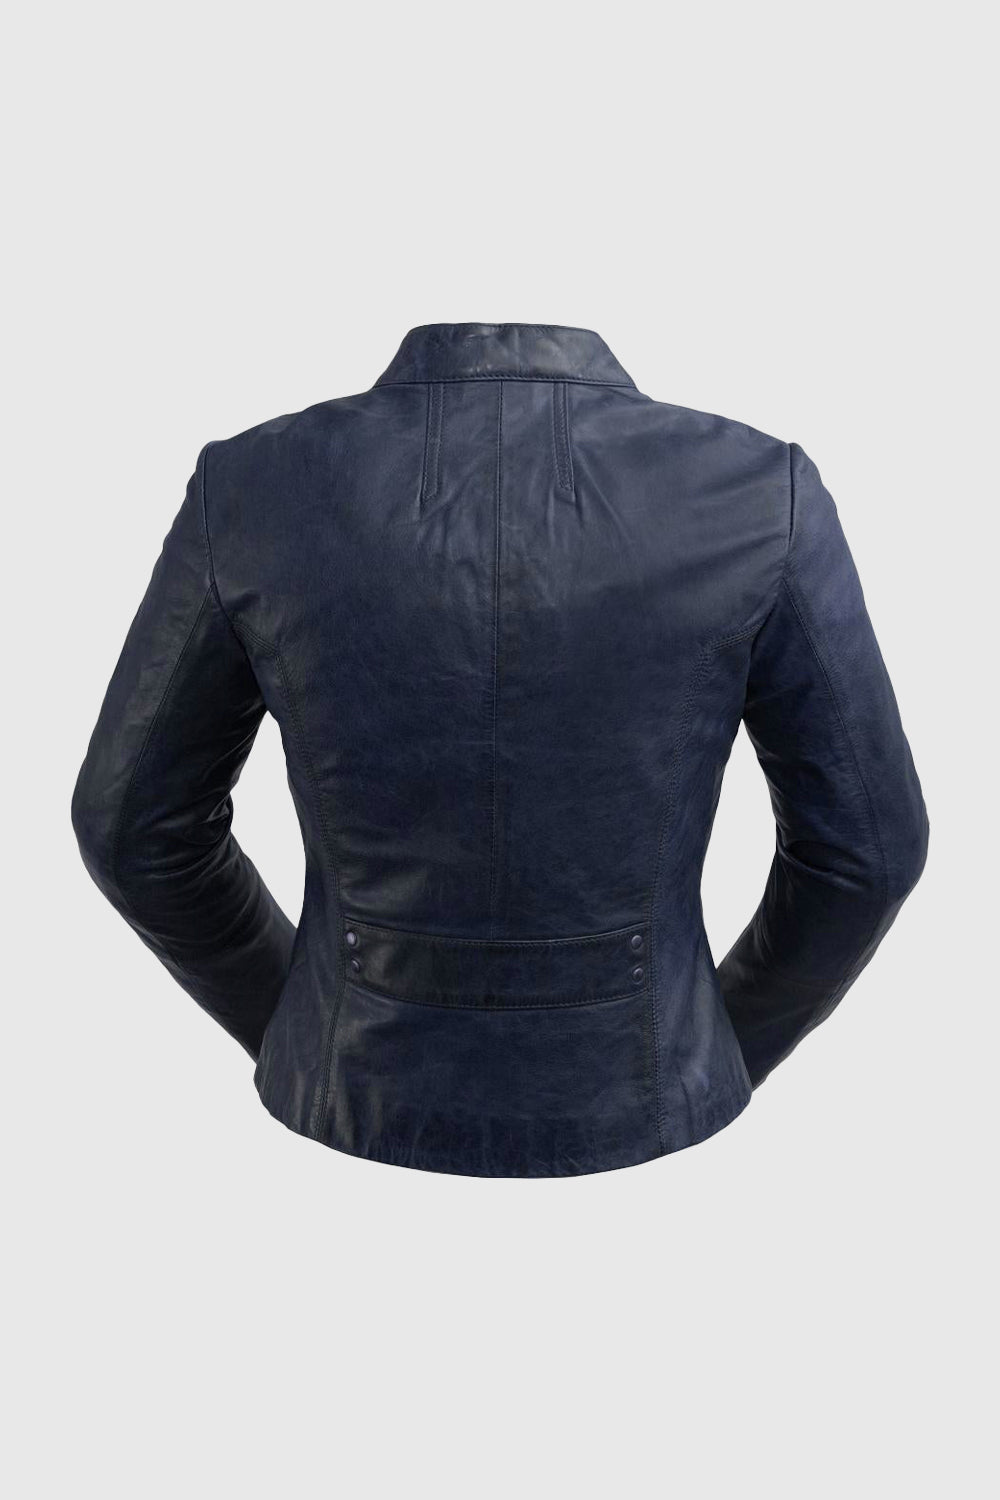 Rexie Womens Fashion Leather Jacket Navy Blue (POS) Women's Leather Jacket Whet Blu NYC   